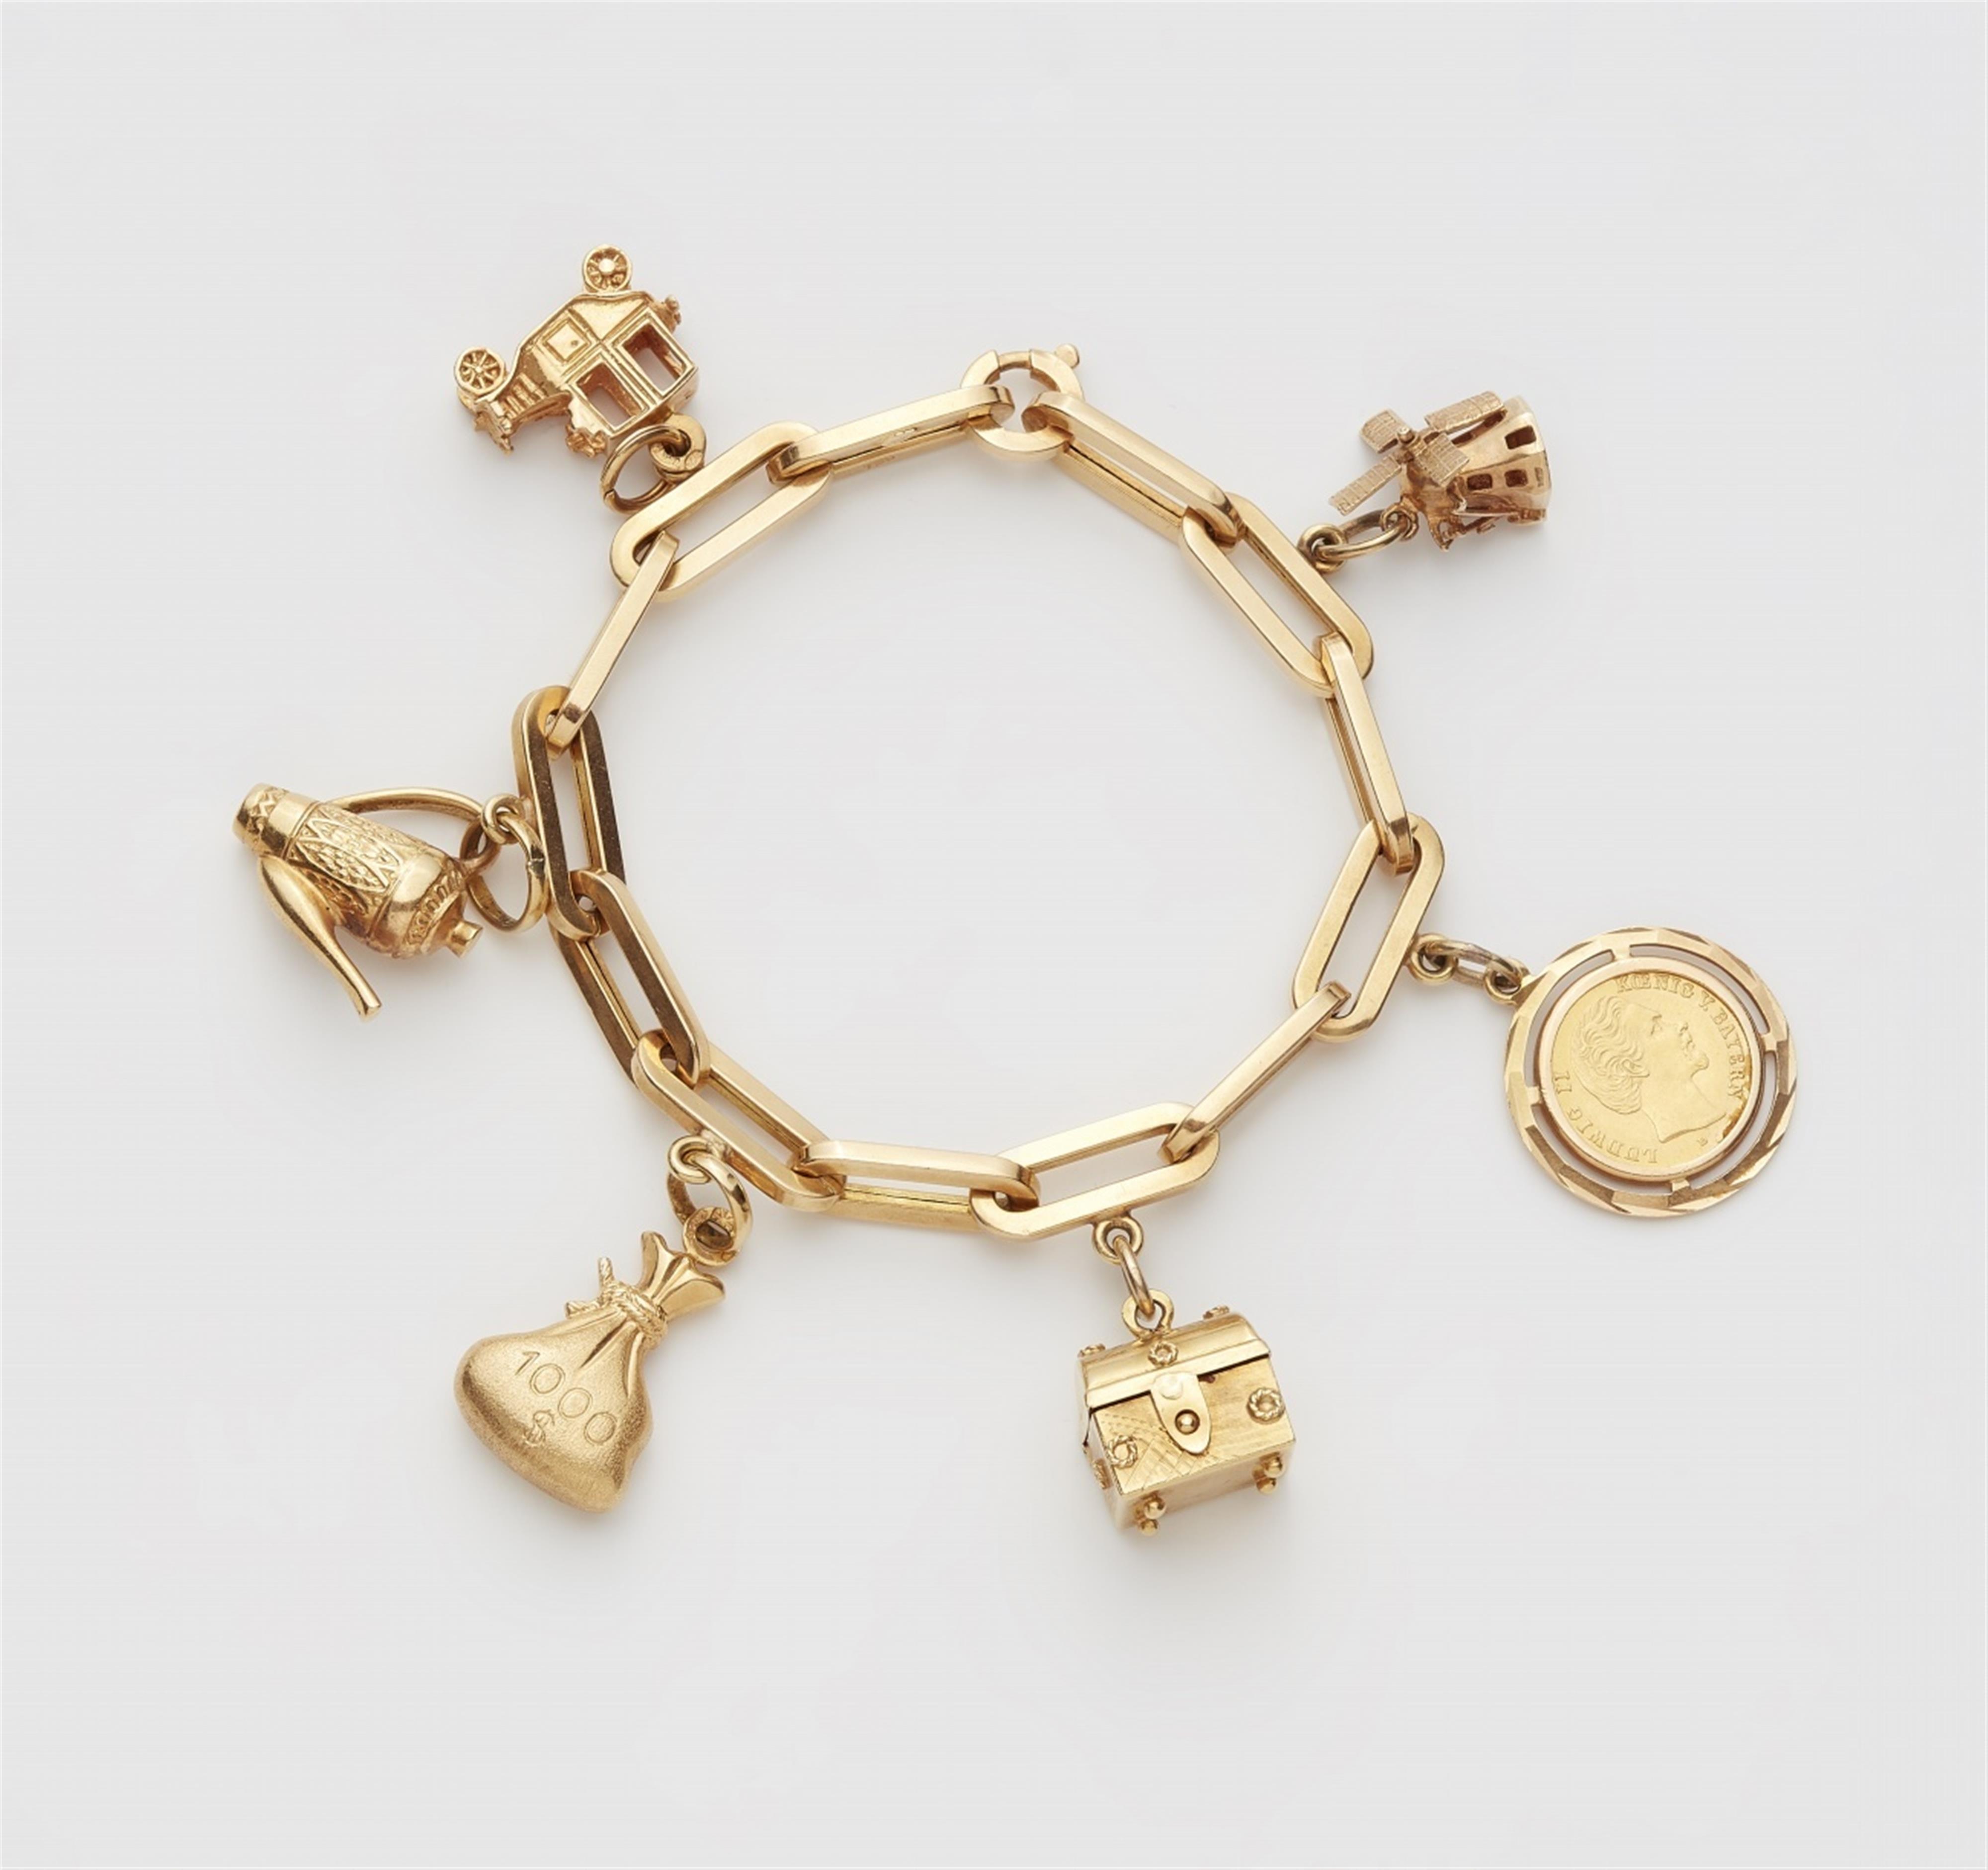 An 18k gold charm bracelet - Lot 173